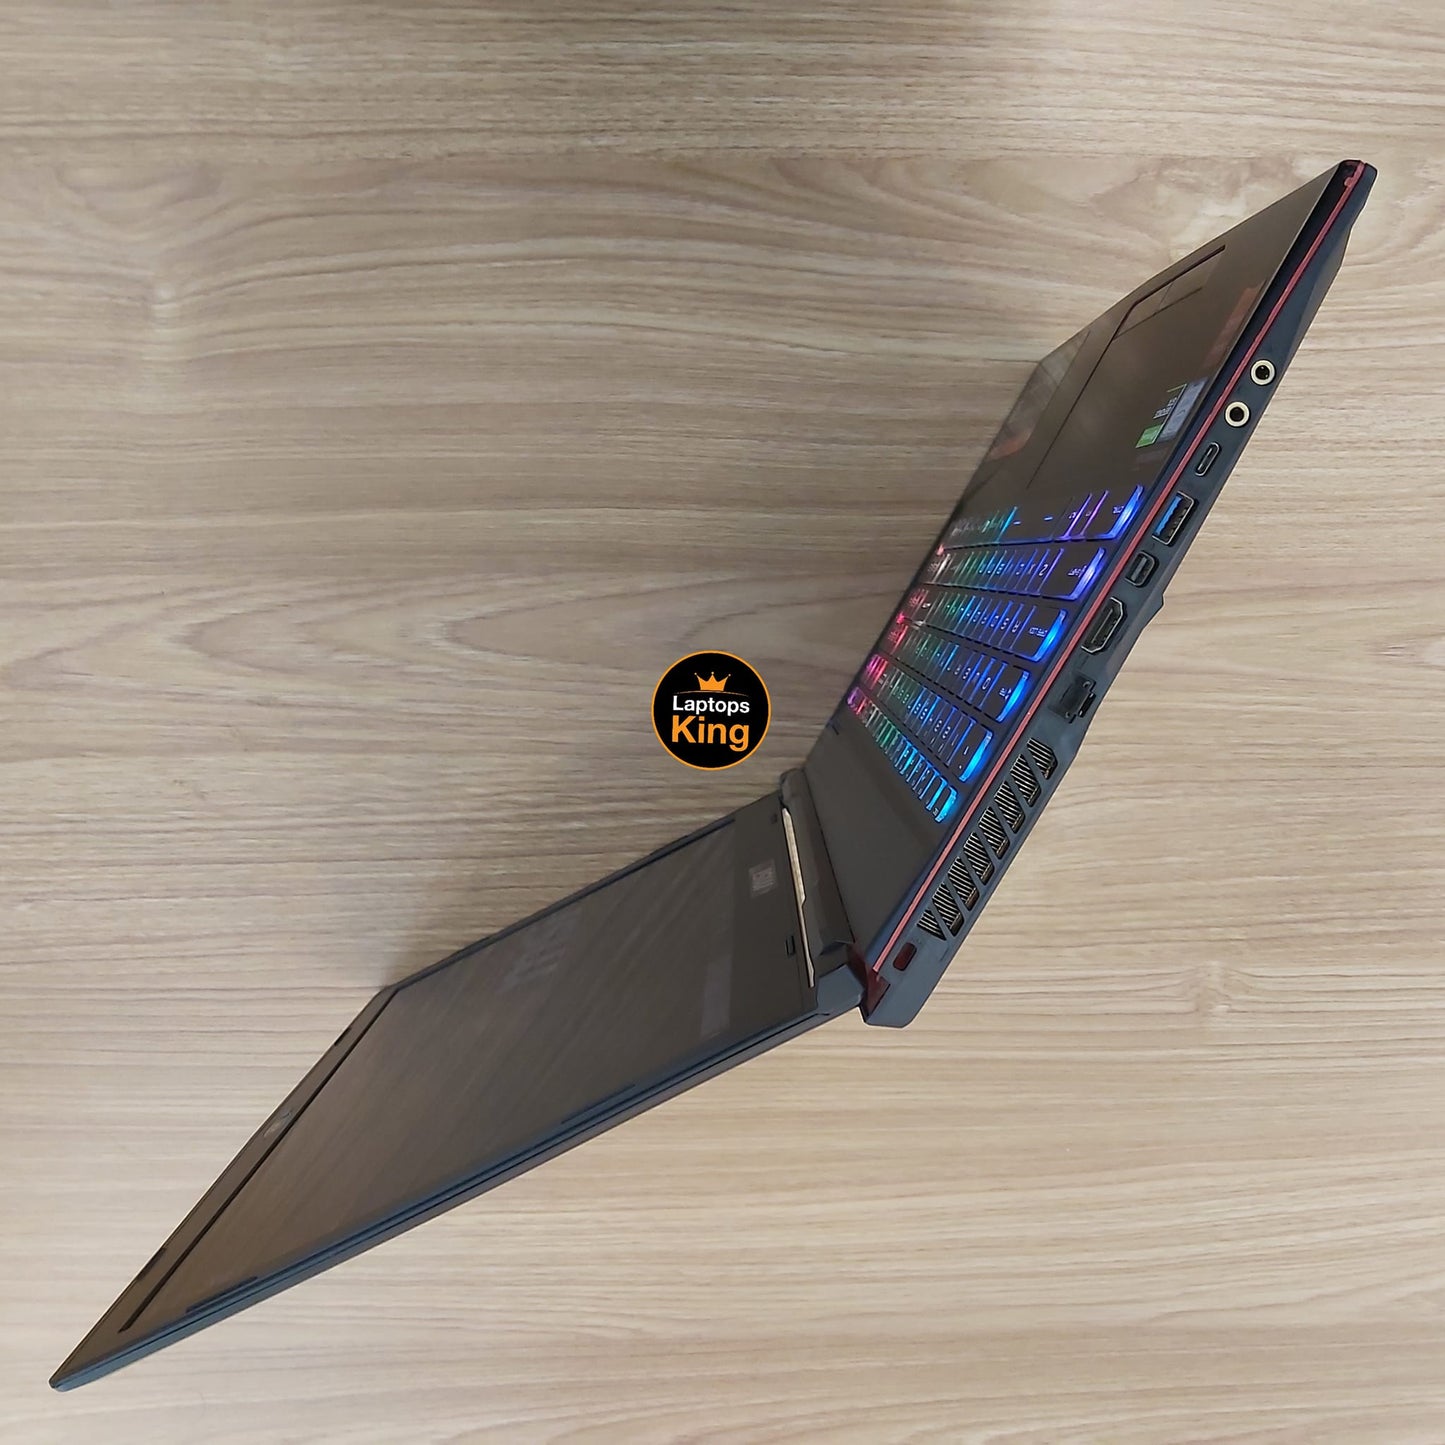 MSi Gl63 i7-9750h GTX 1660Ti 120Hz Gaming Laptop (Open Box)